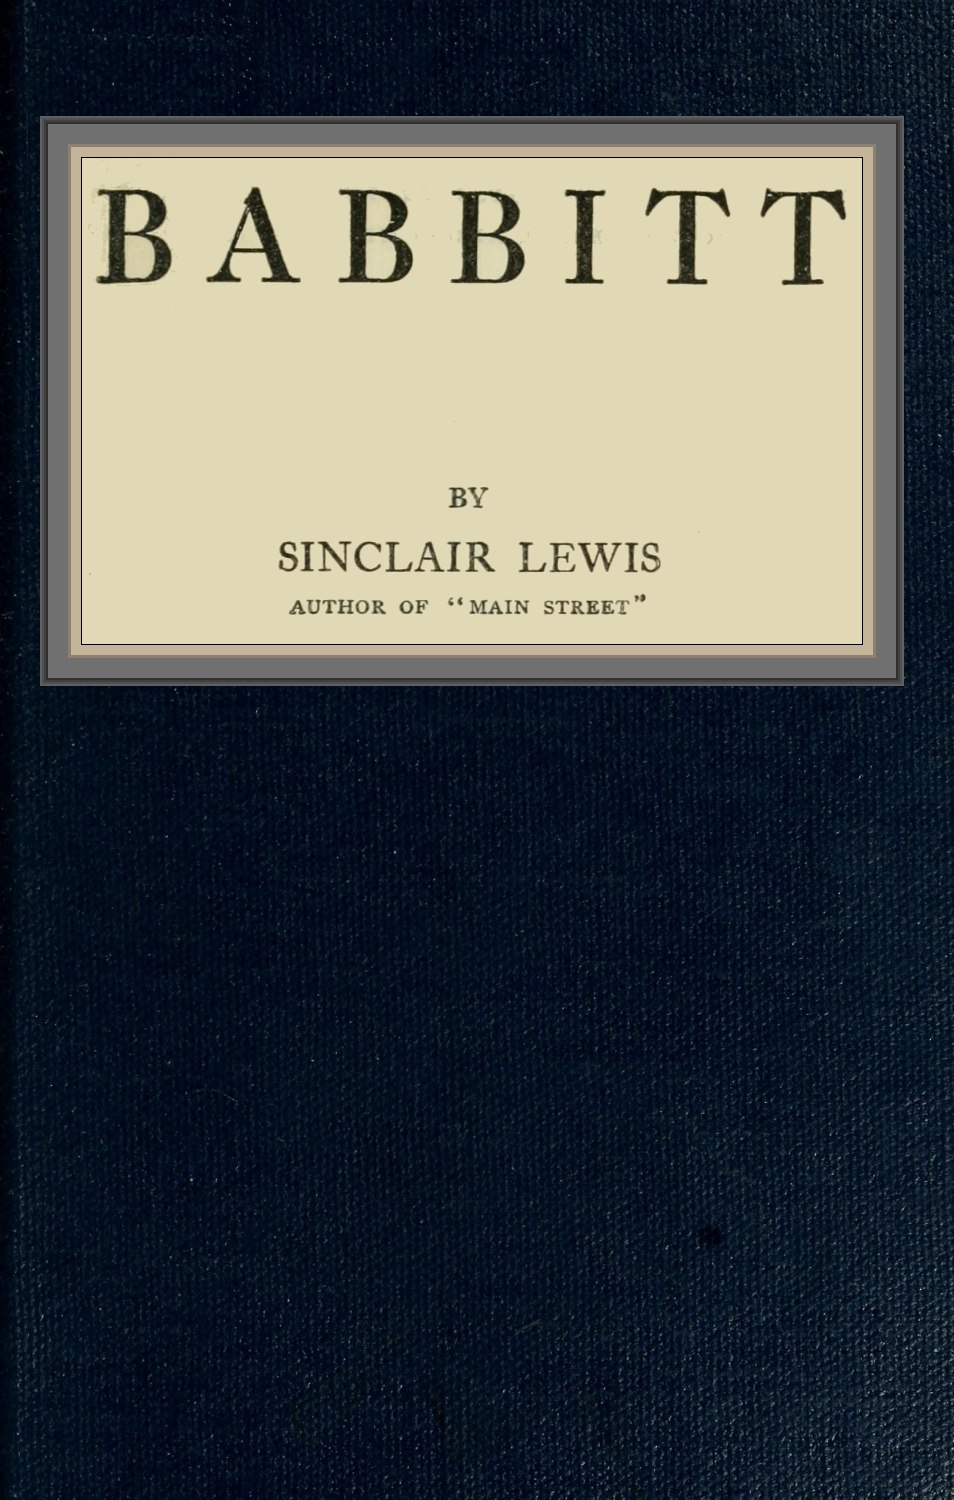 The Project Gutenberg eBook of Babbitt, by Sinclair